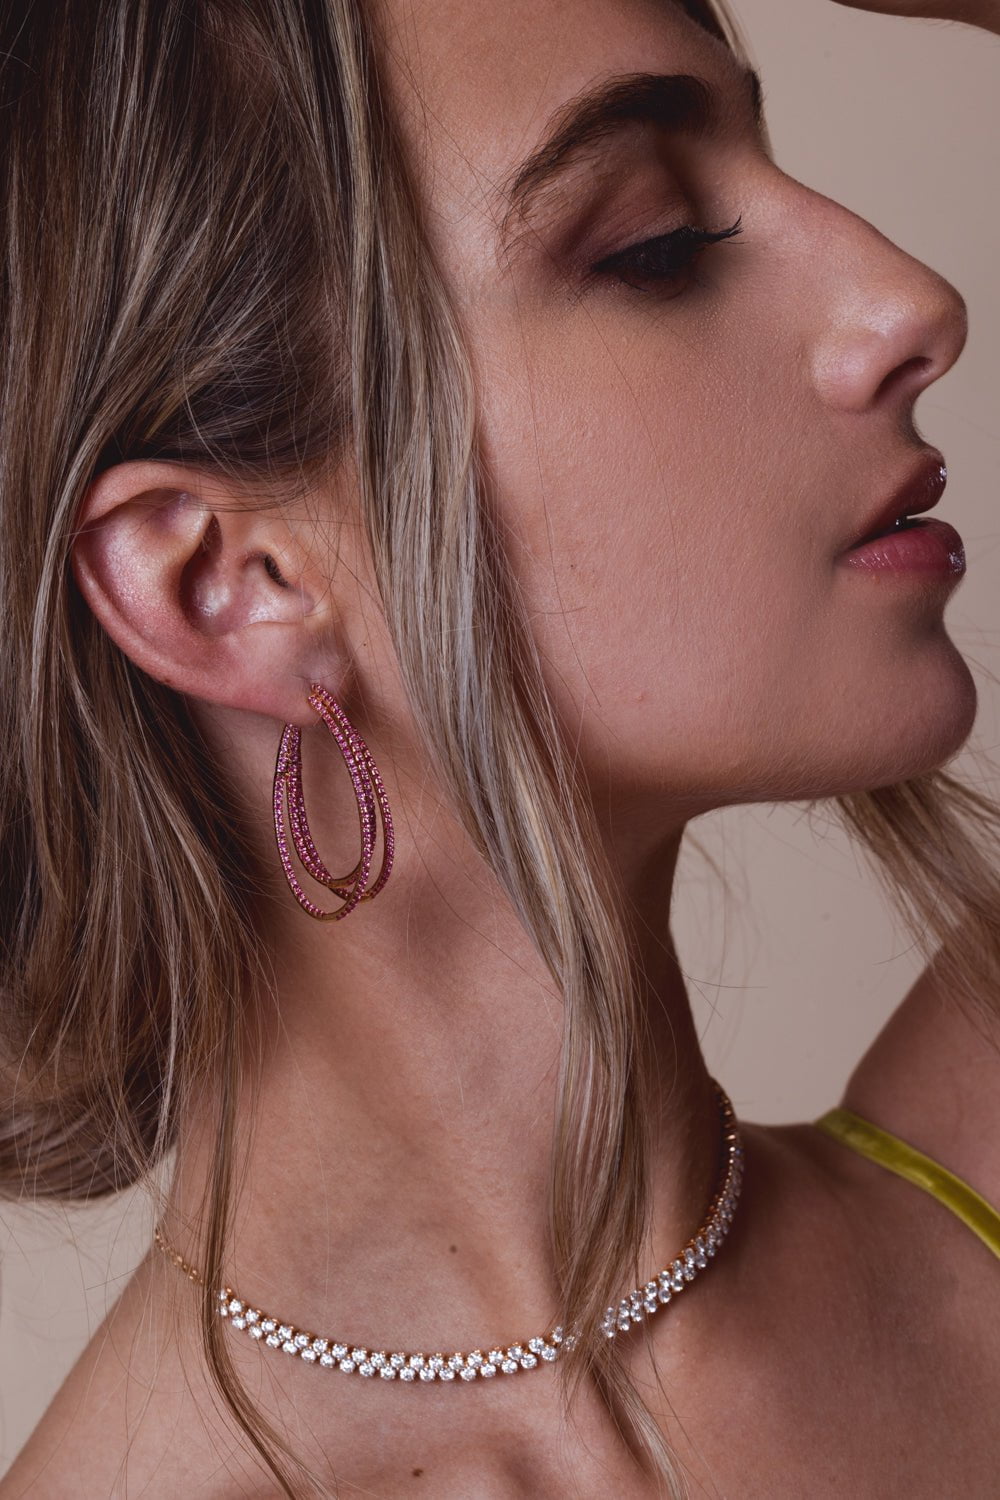 STEFERE-Pink Sapphire Triple Hoop Earrings-ROSE GOLD